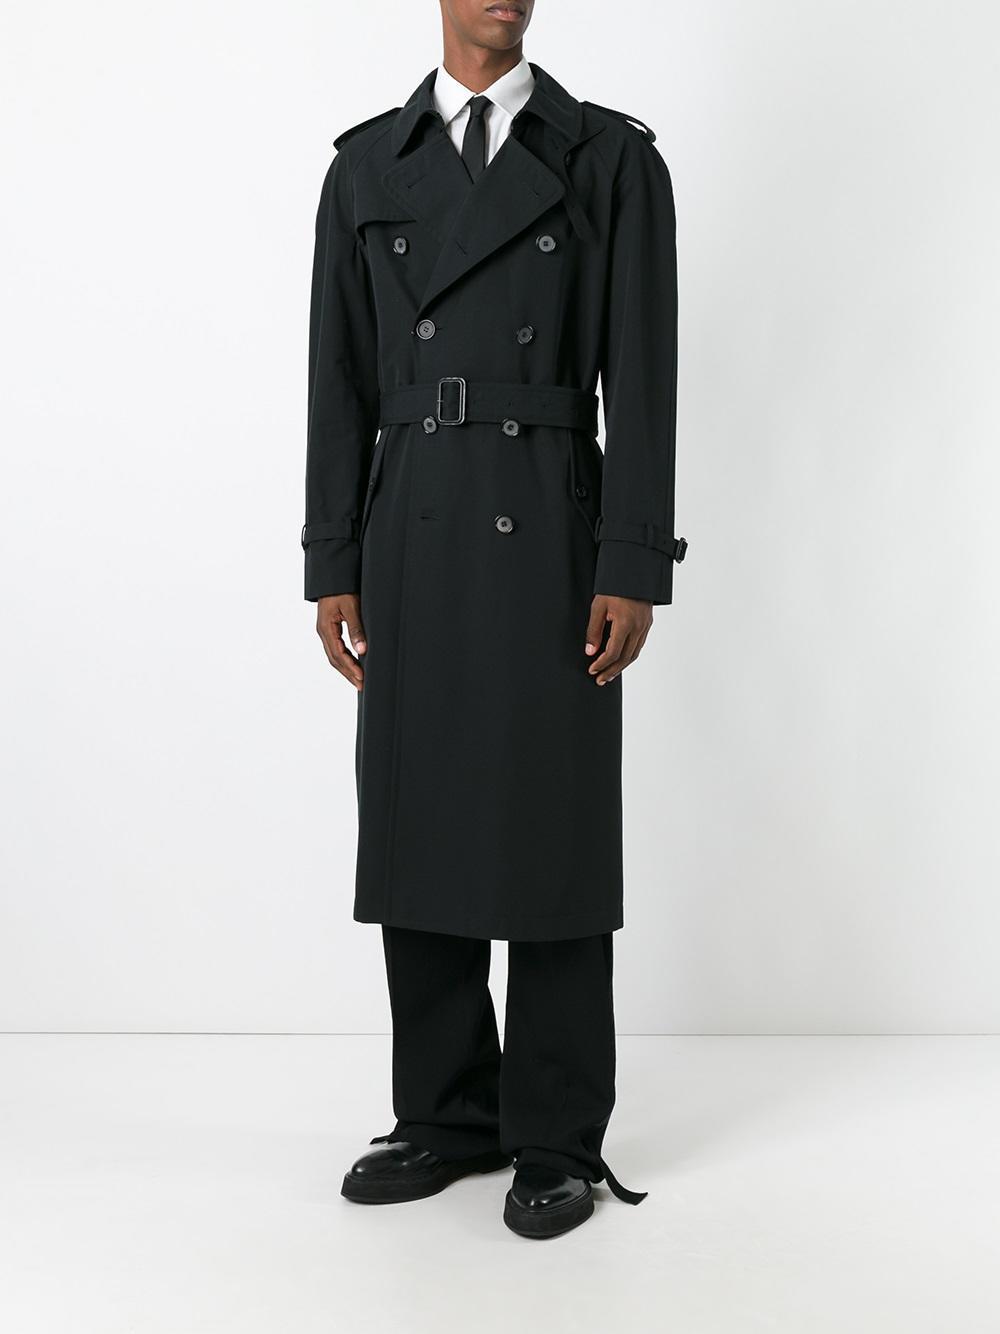 Lyst - Alexander Mcqueen Double Breasted Trench Coat in Black for Men